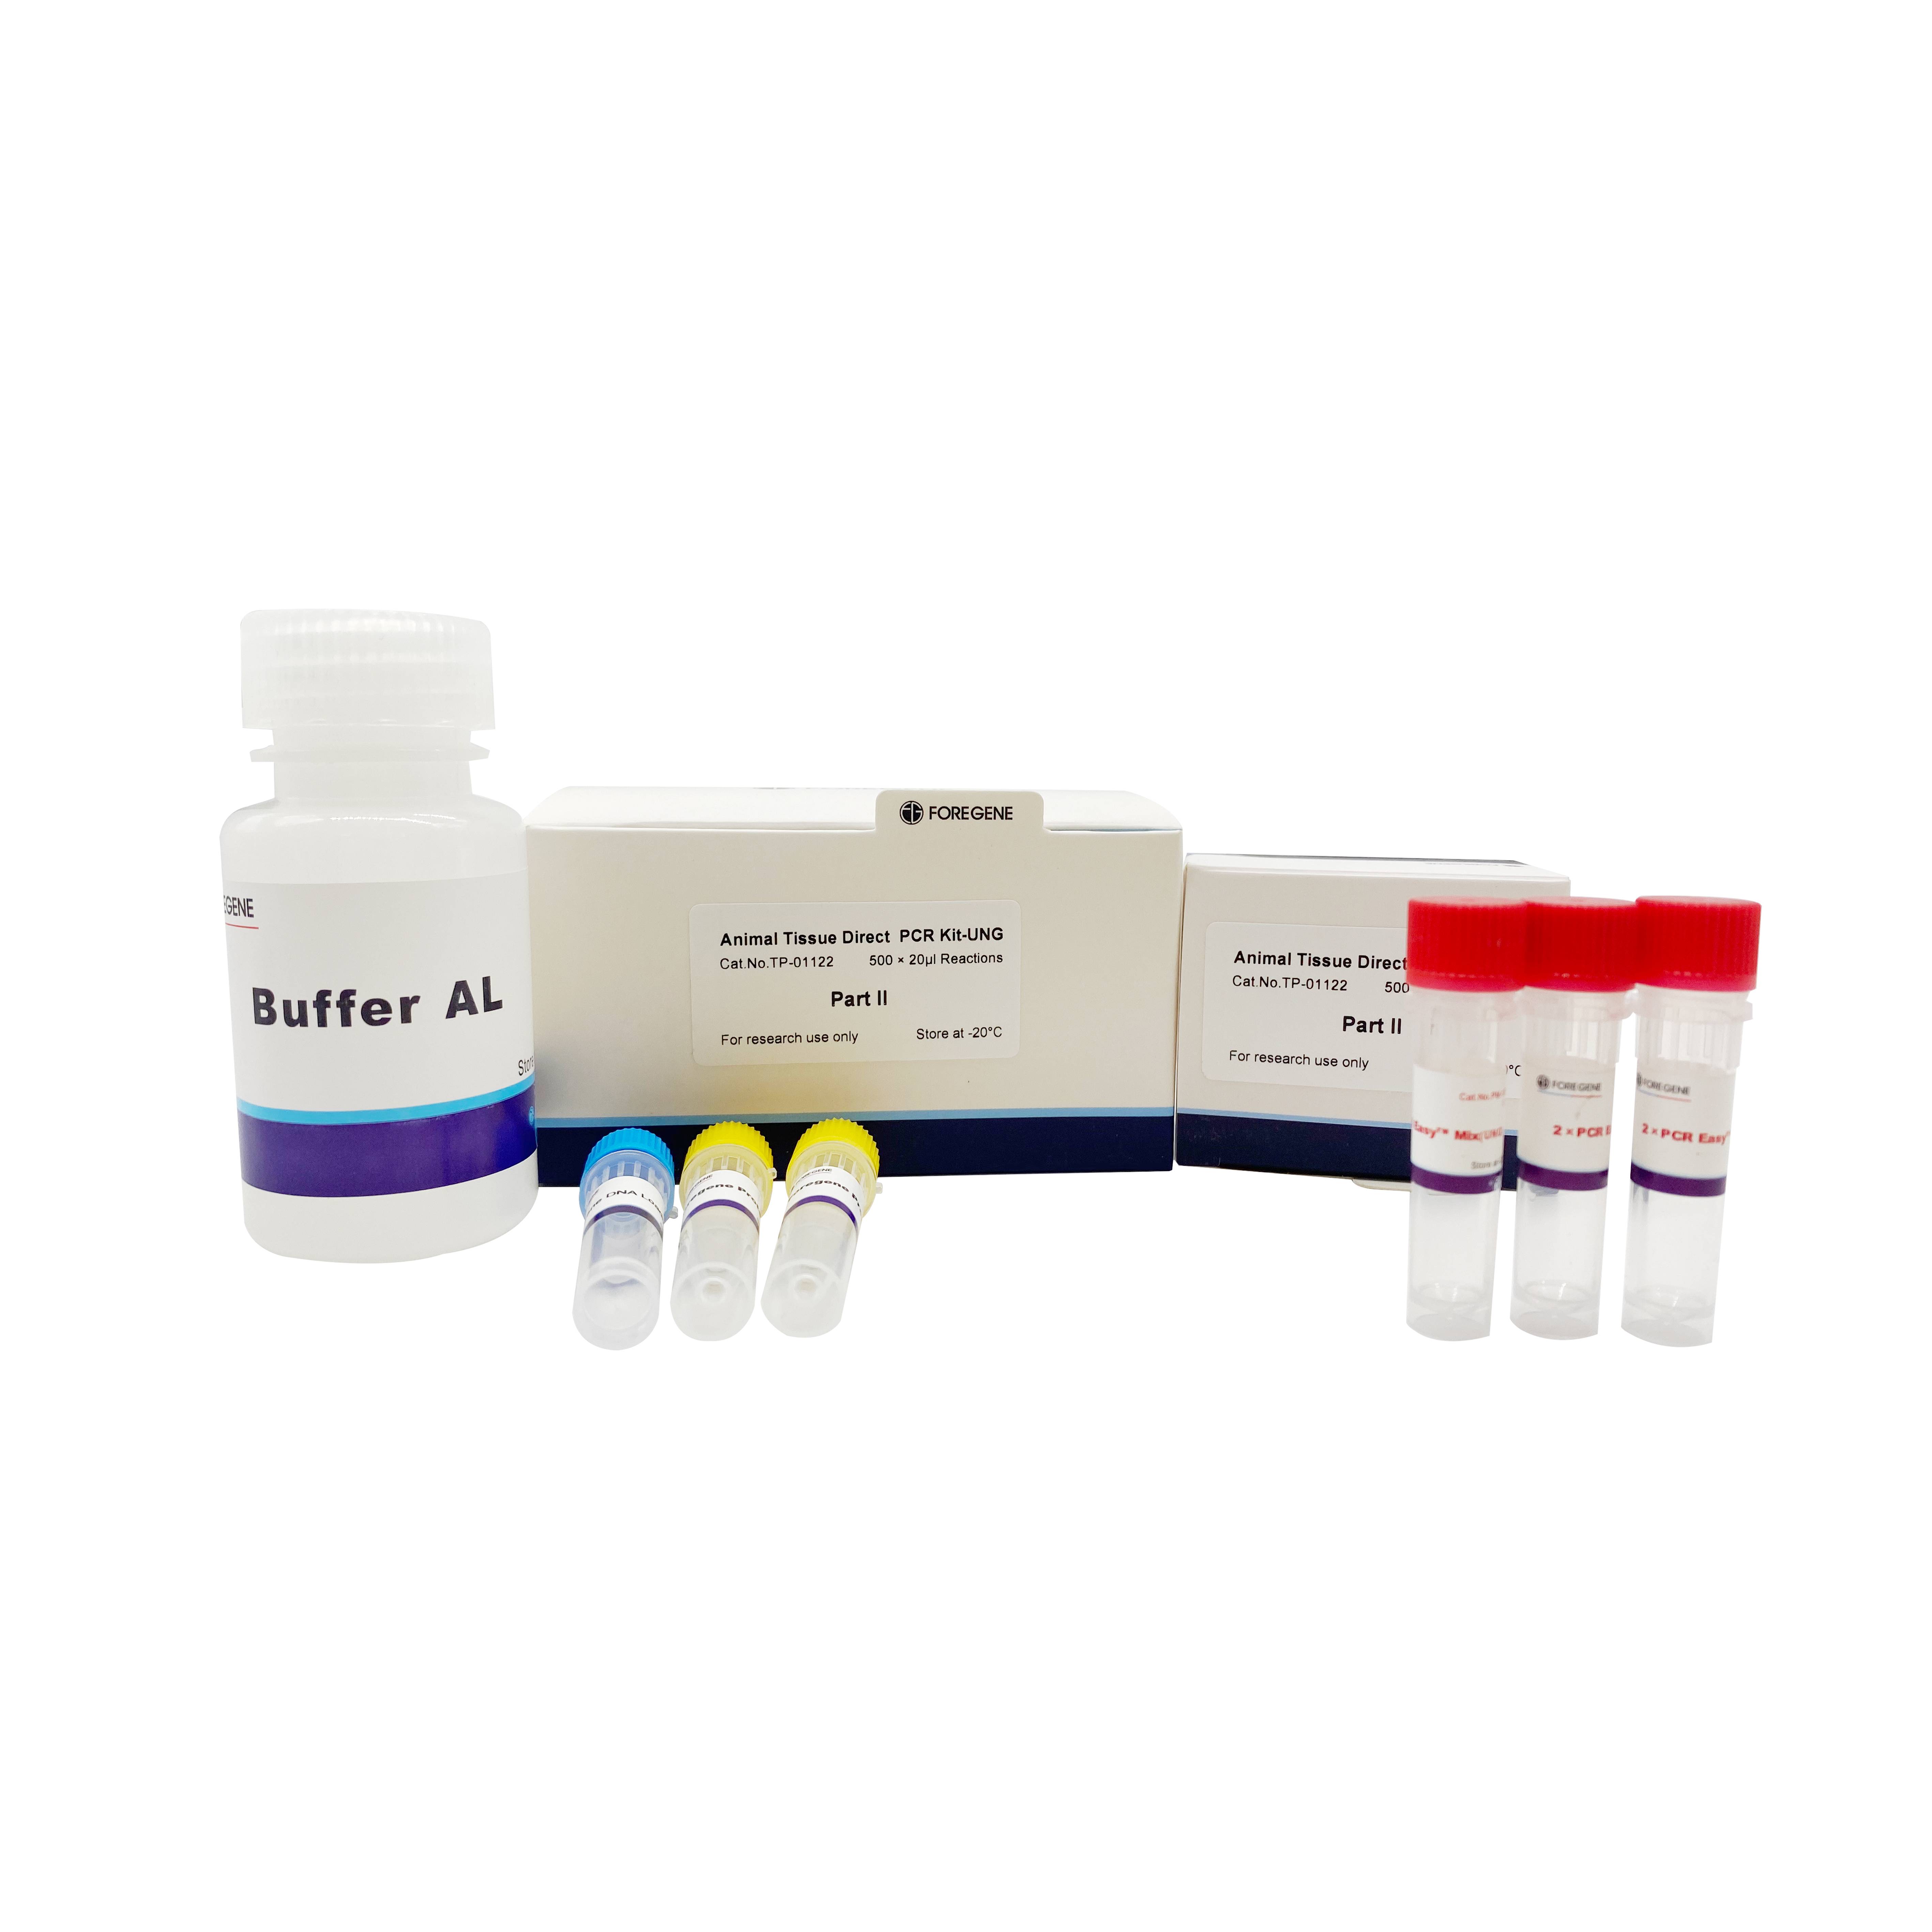 Animal Tissue Direct PCR kit-UNG